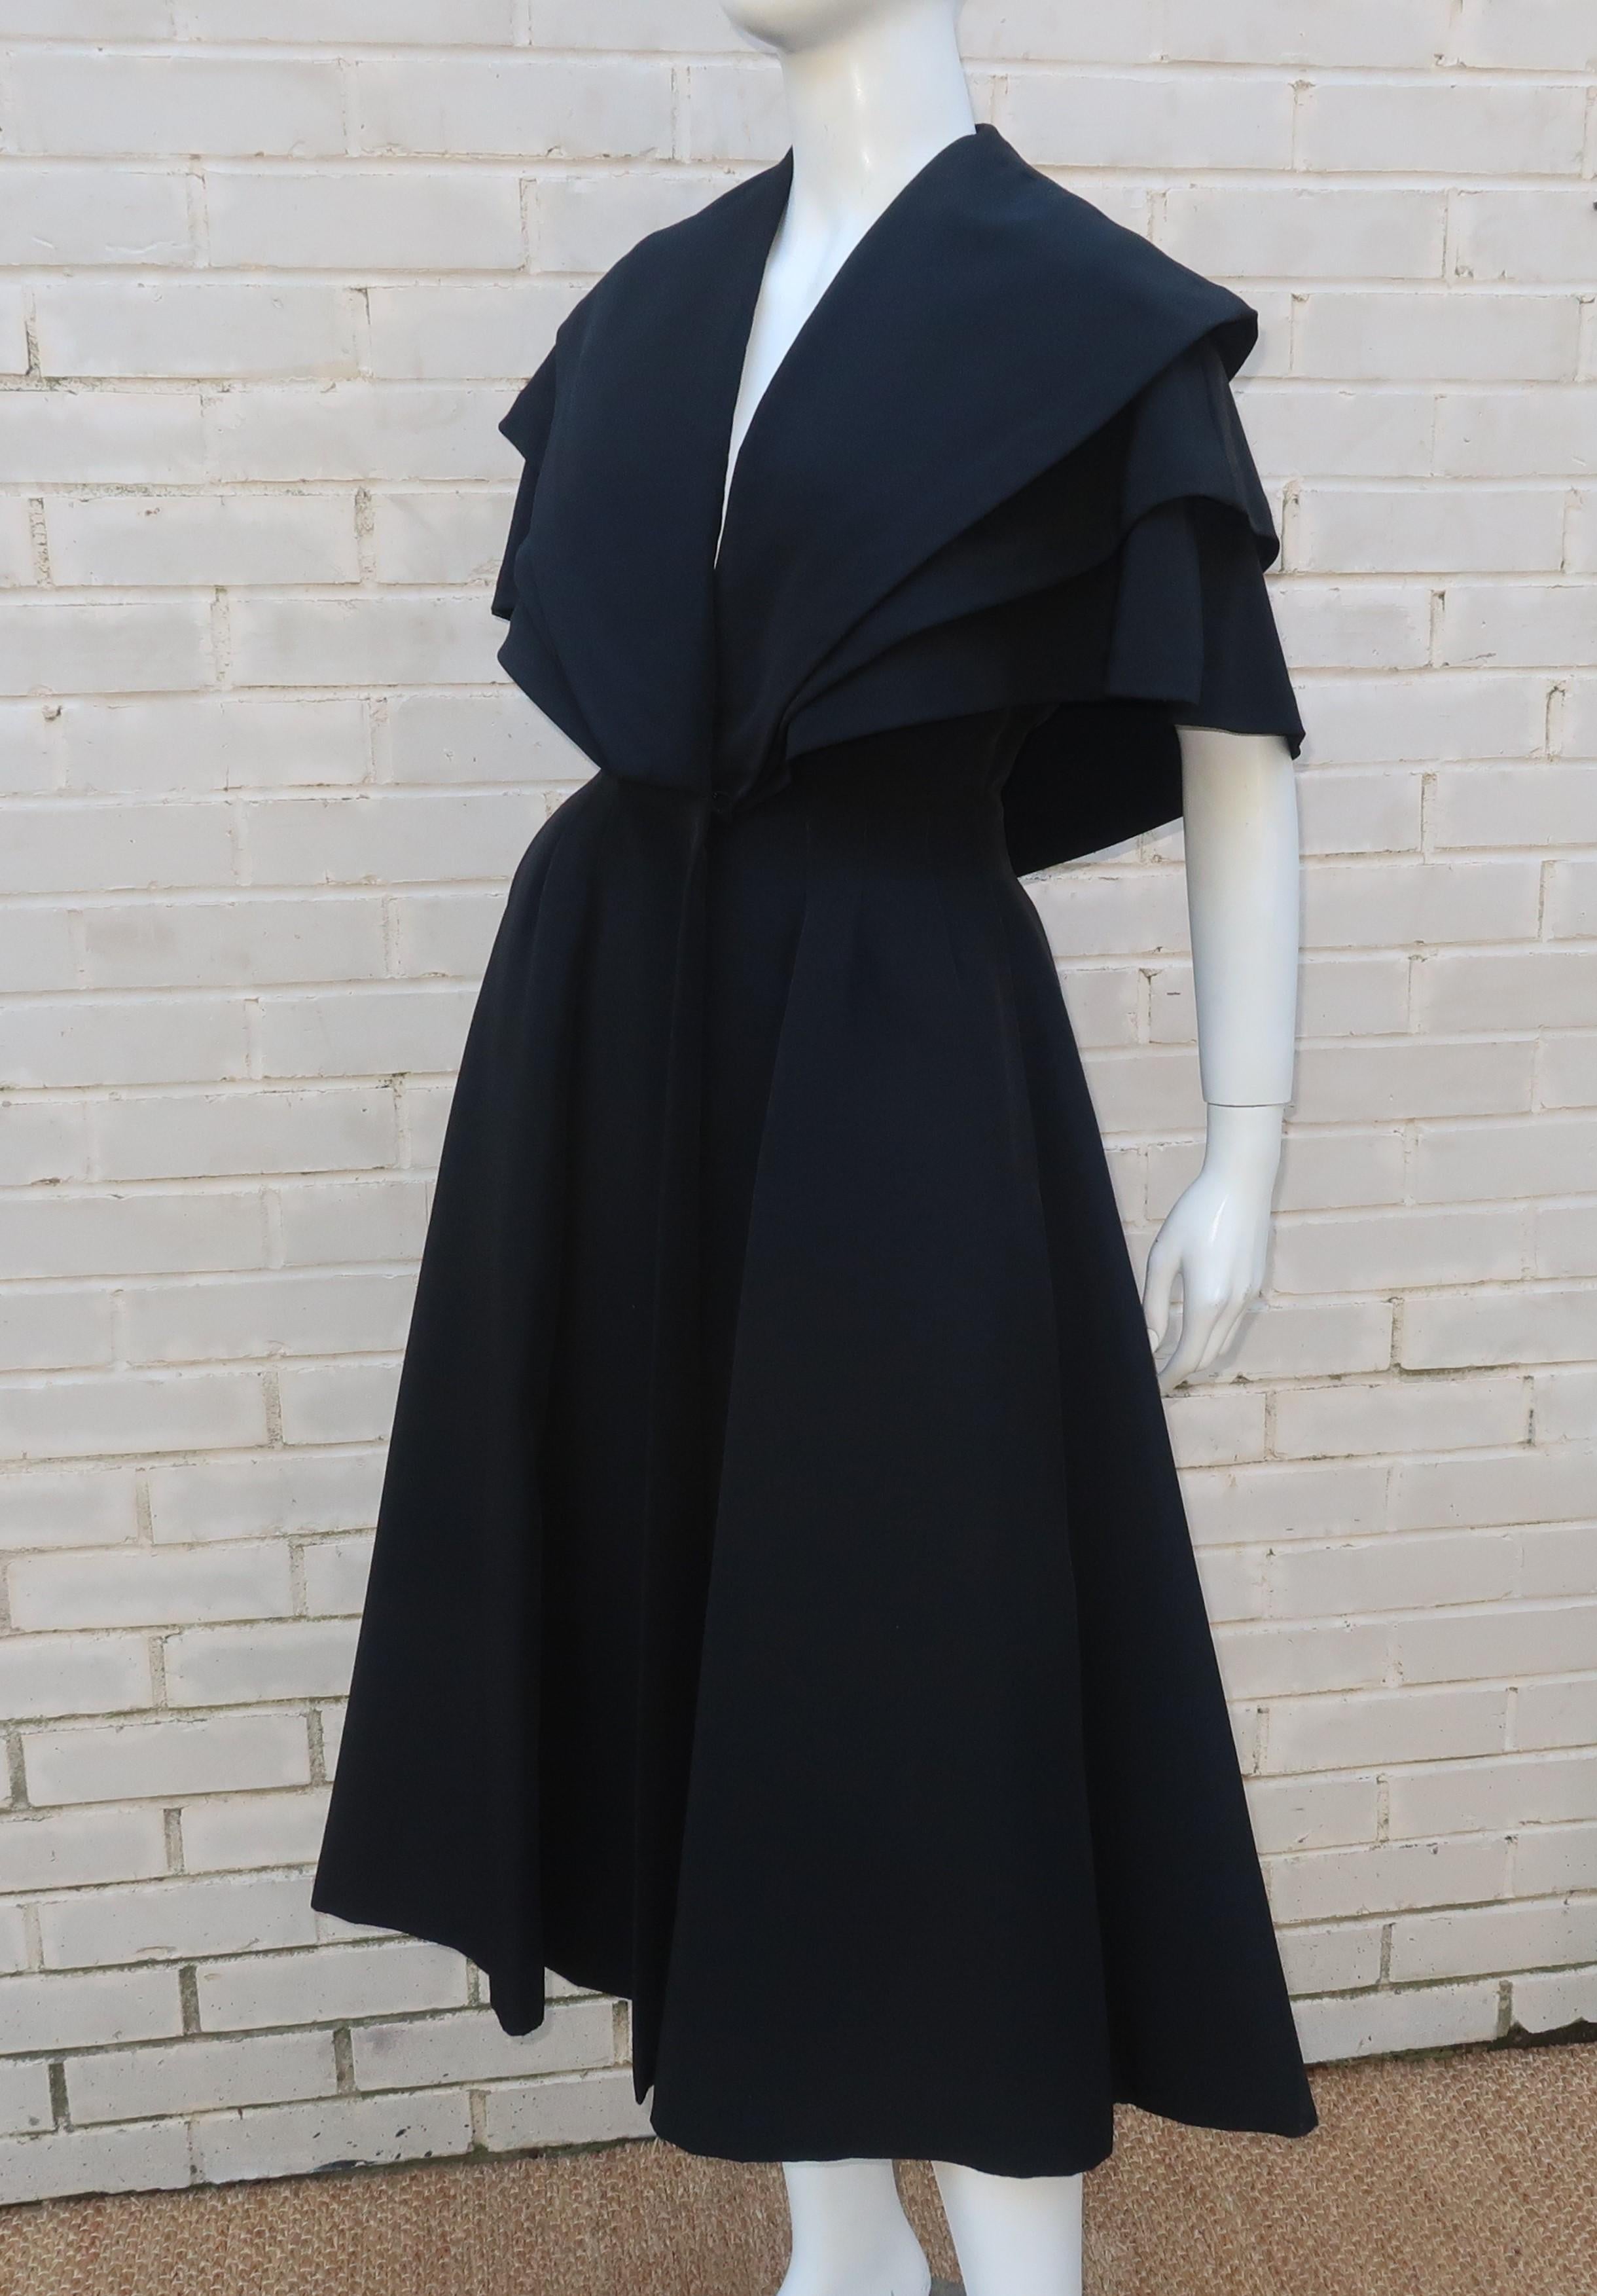 Women's Bonwit Teller 'New Look' Black Silk Faille Evening Coat Dress, C.1950